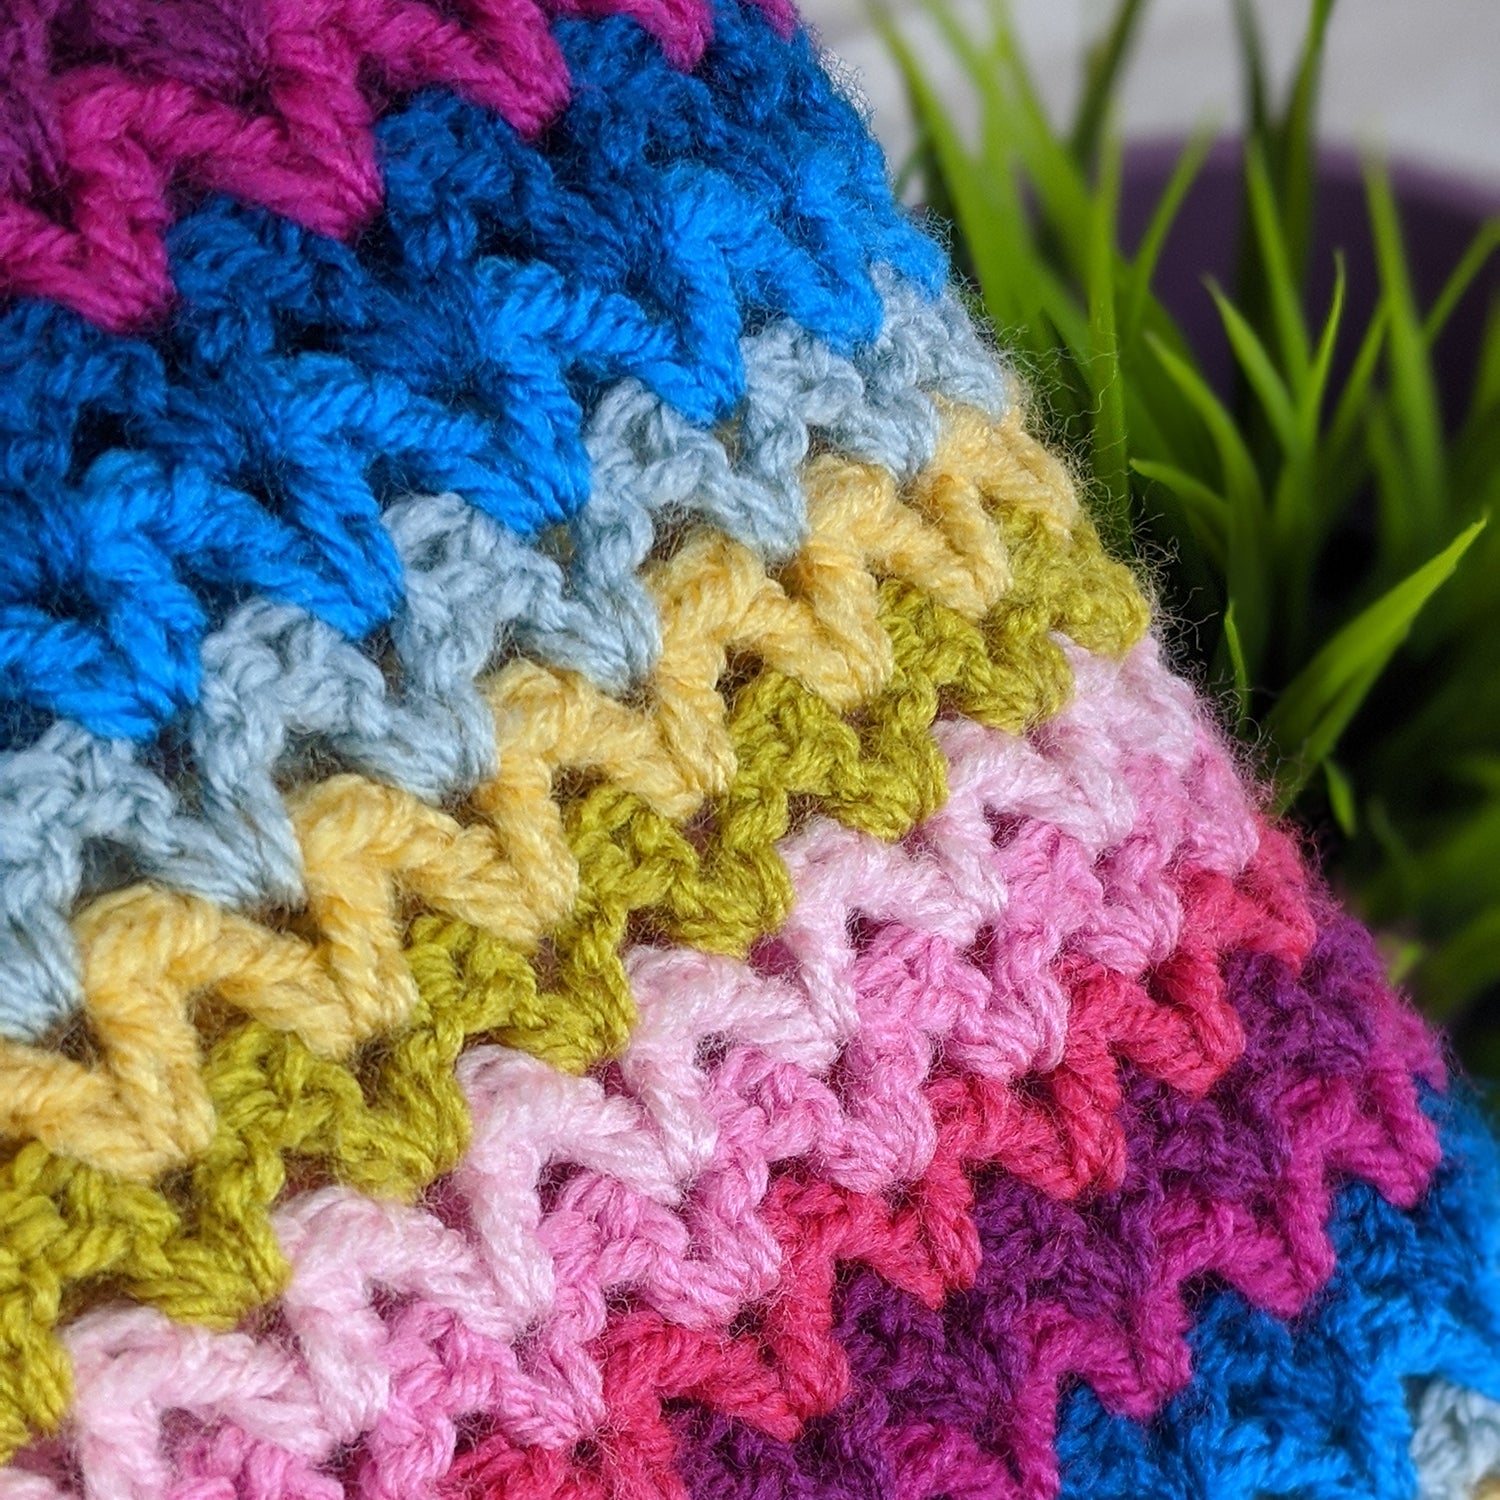 The Kayli Blanket - a new crocheted blanket